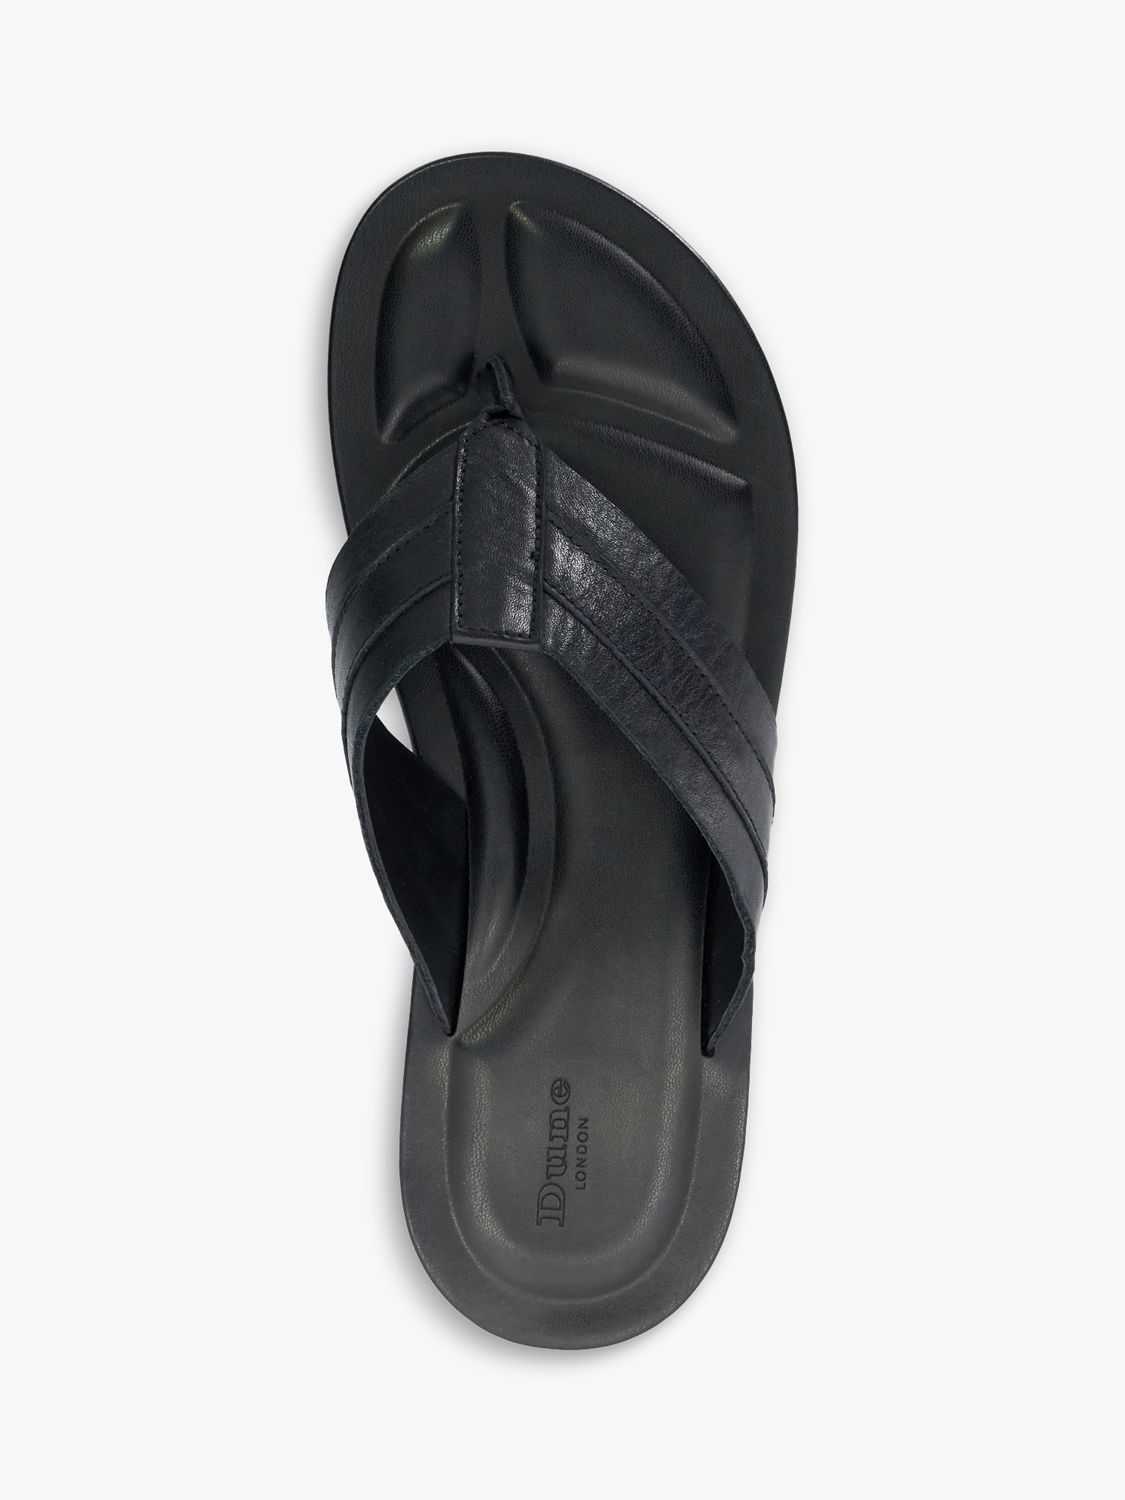 Dune Fredos Leather Flip Flops, Black, 7